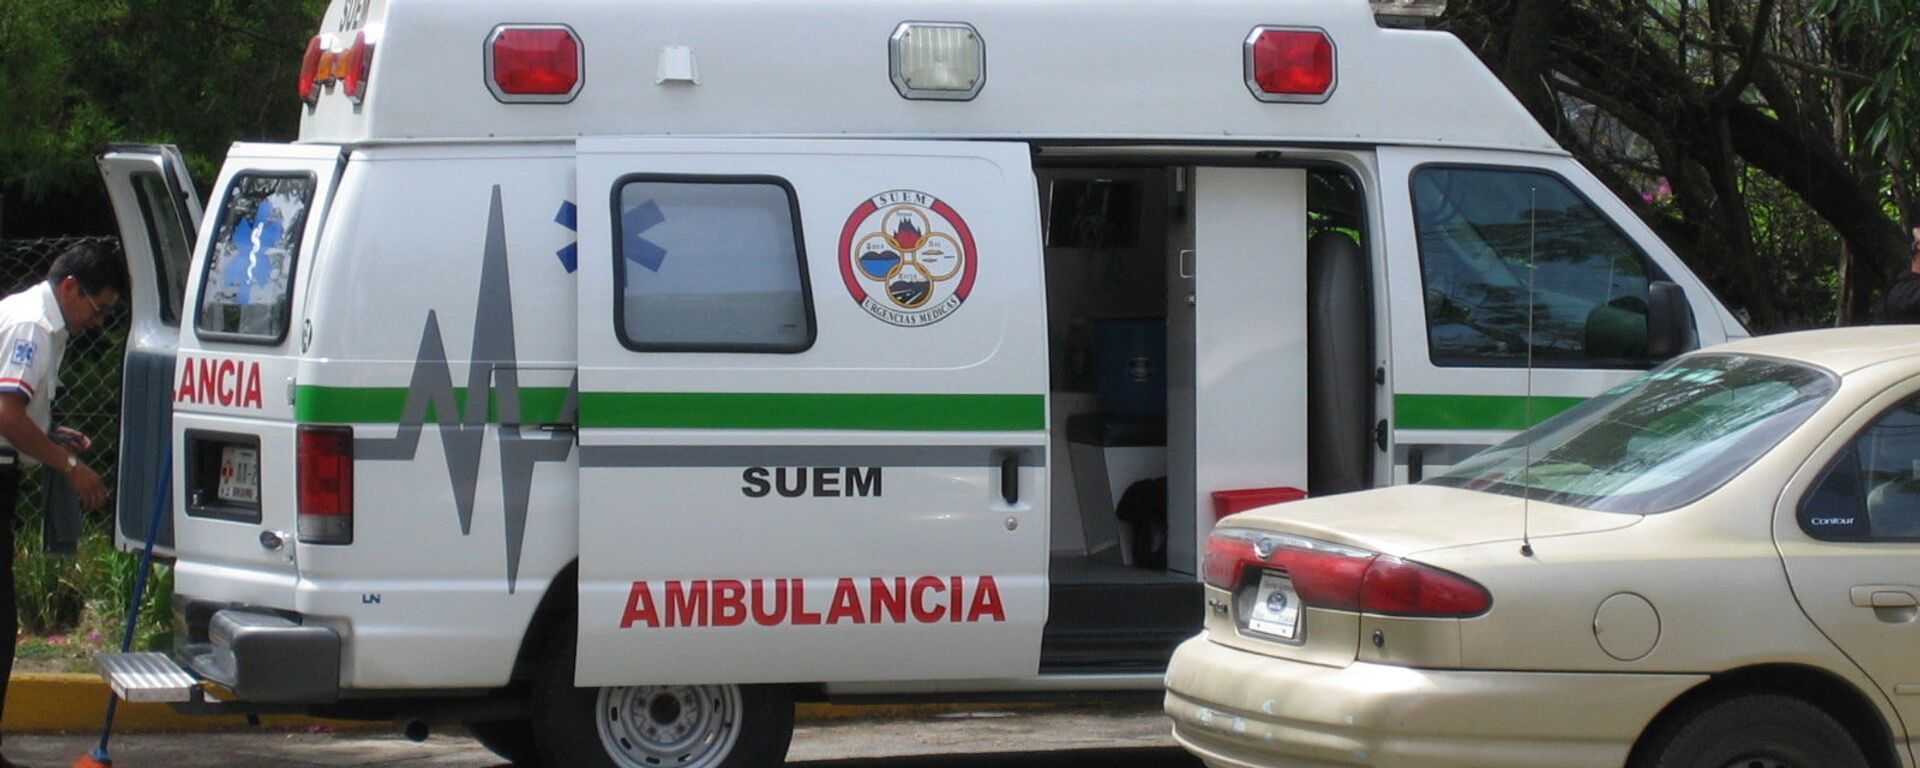 Ambulancia mexicana (archivo) - Sputnik Mundo, 1920, 04.06.2021